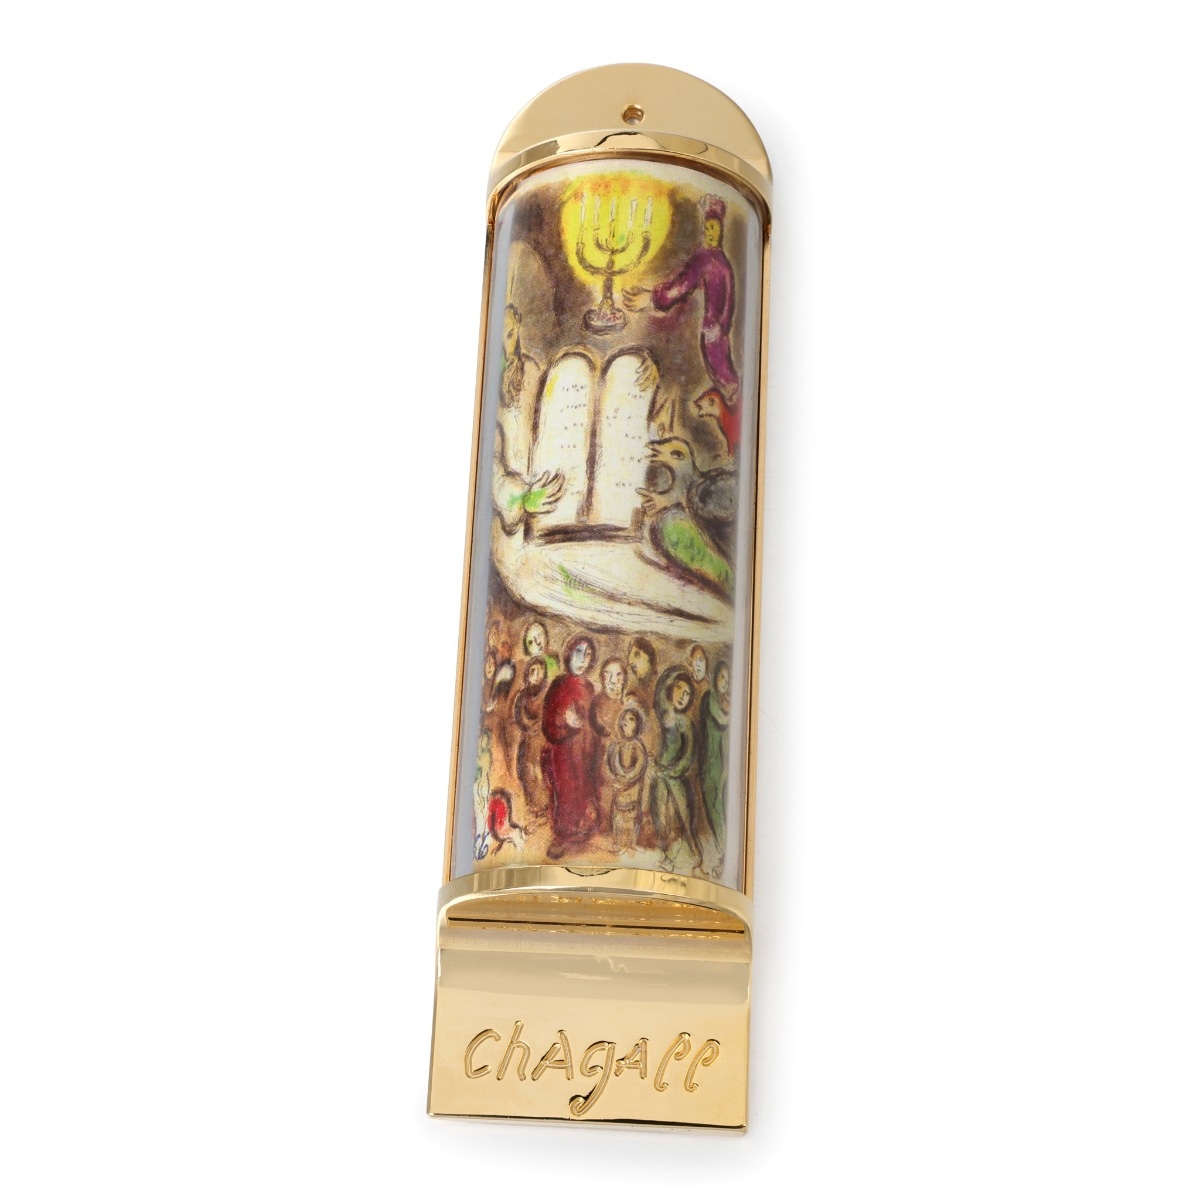  Limited Edition Marc Chagall Mezuzah - Ten Commandments (24K Gold-Plated) - 1